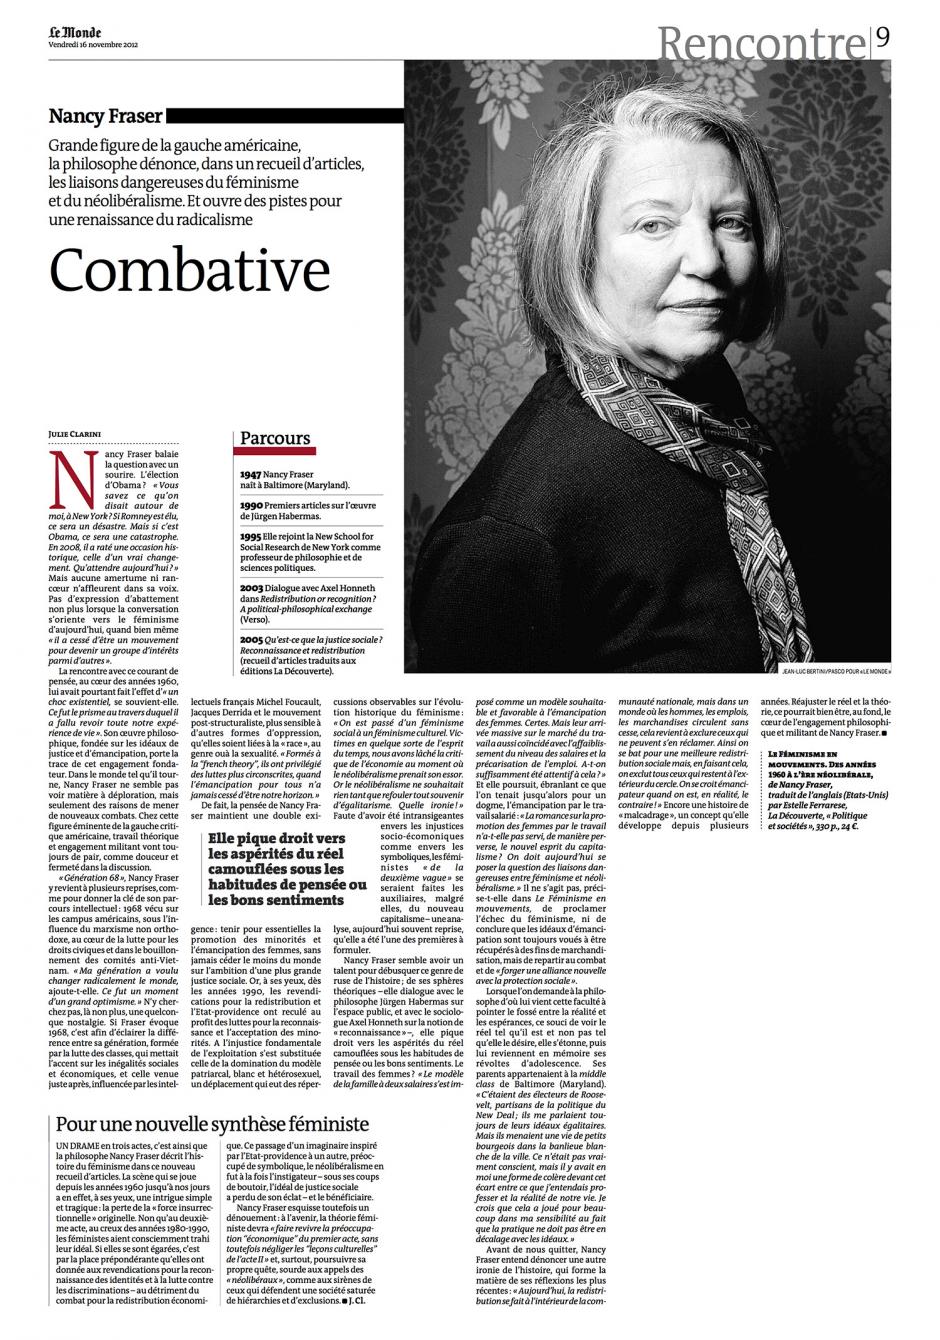 20121116-Le Monde-Nancy Fraser, combative